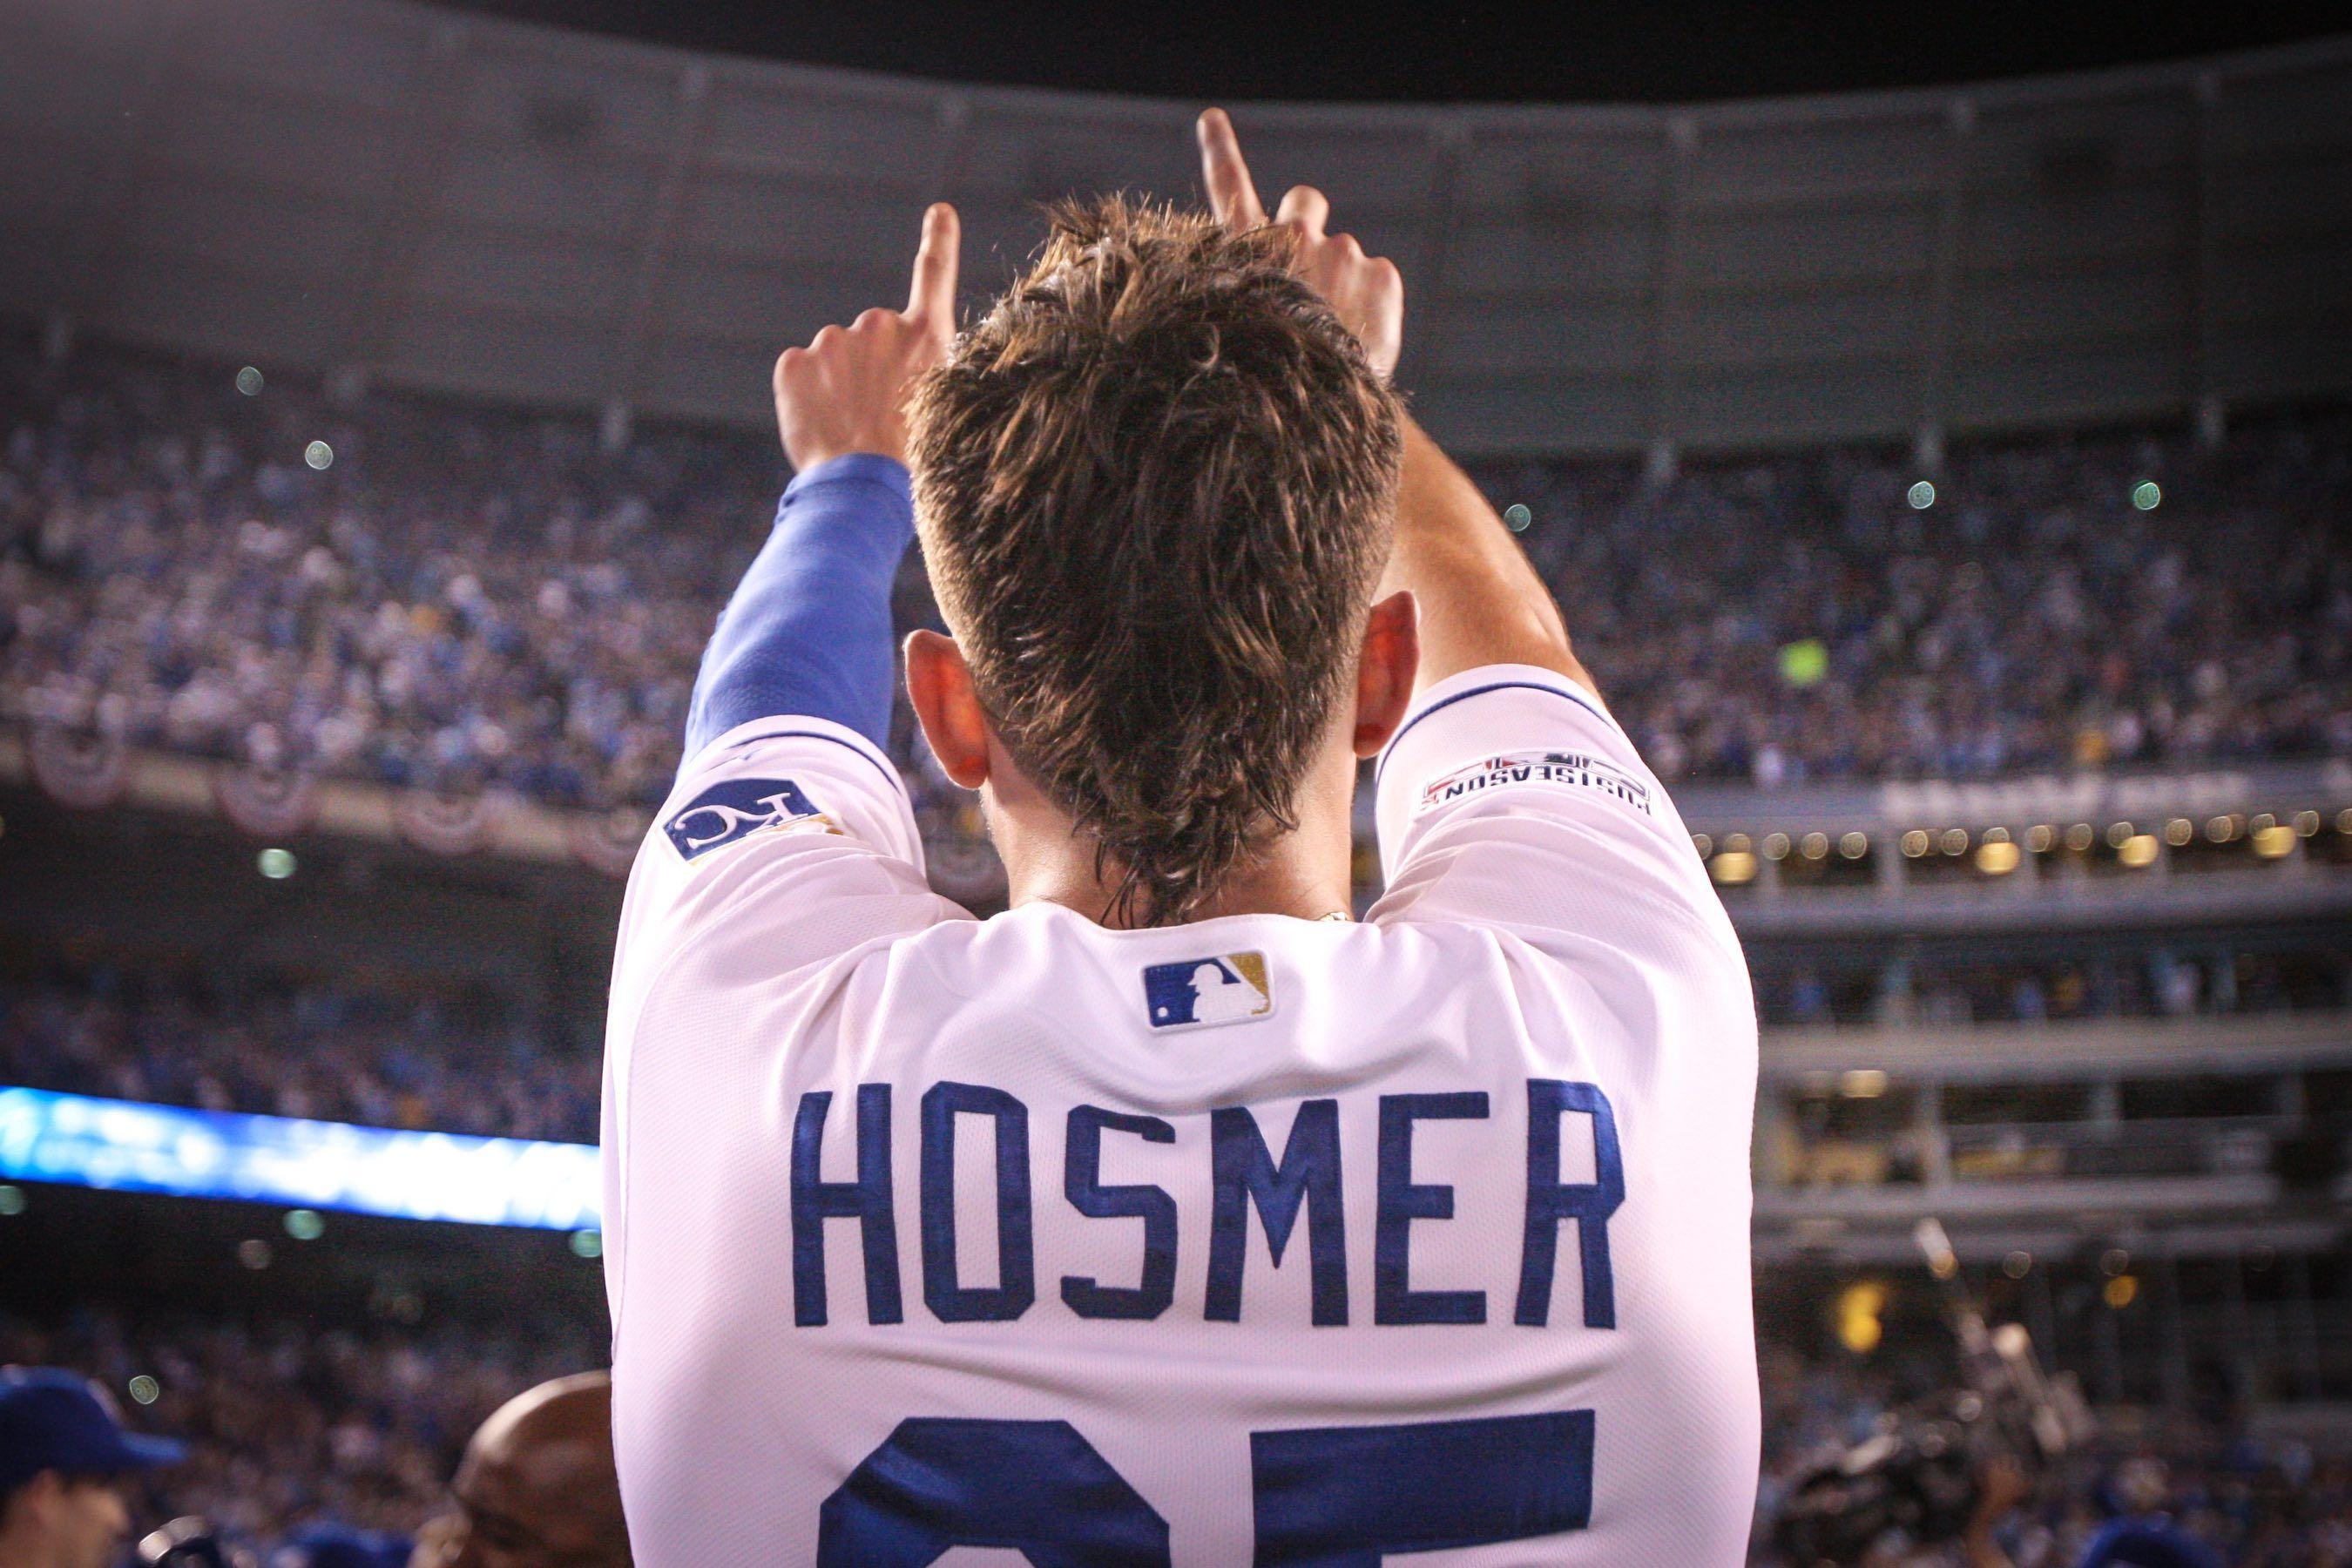 Best Eric Hosmer image. Eric hosmer, Kansas City Royals